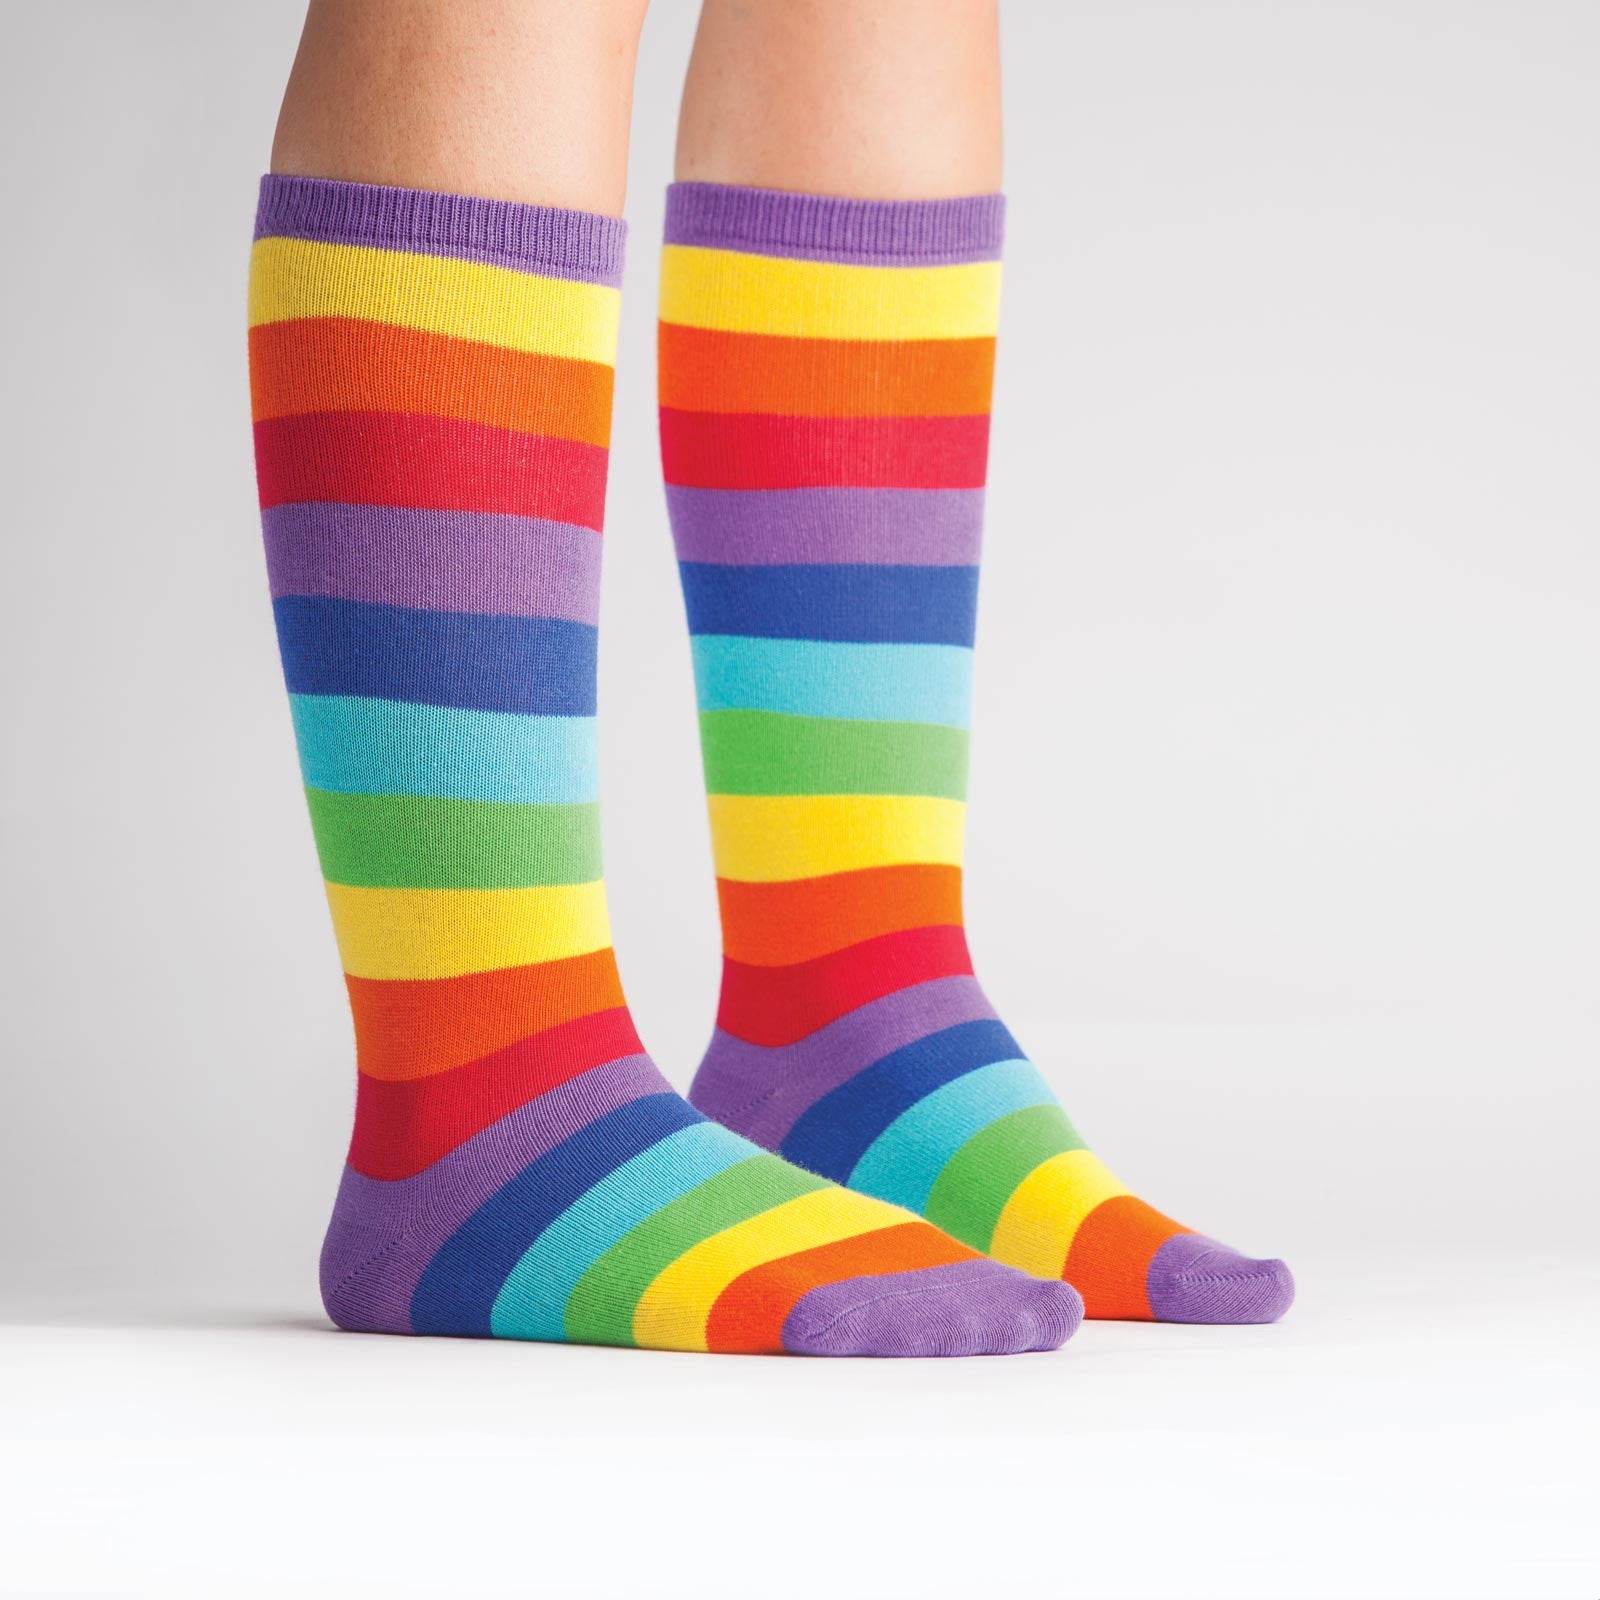 Kids Pink Stripe Socks